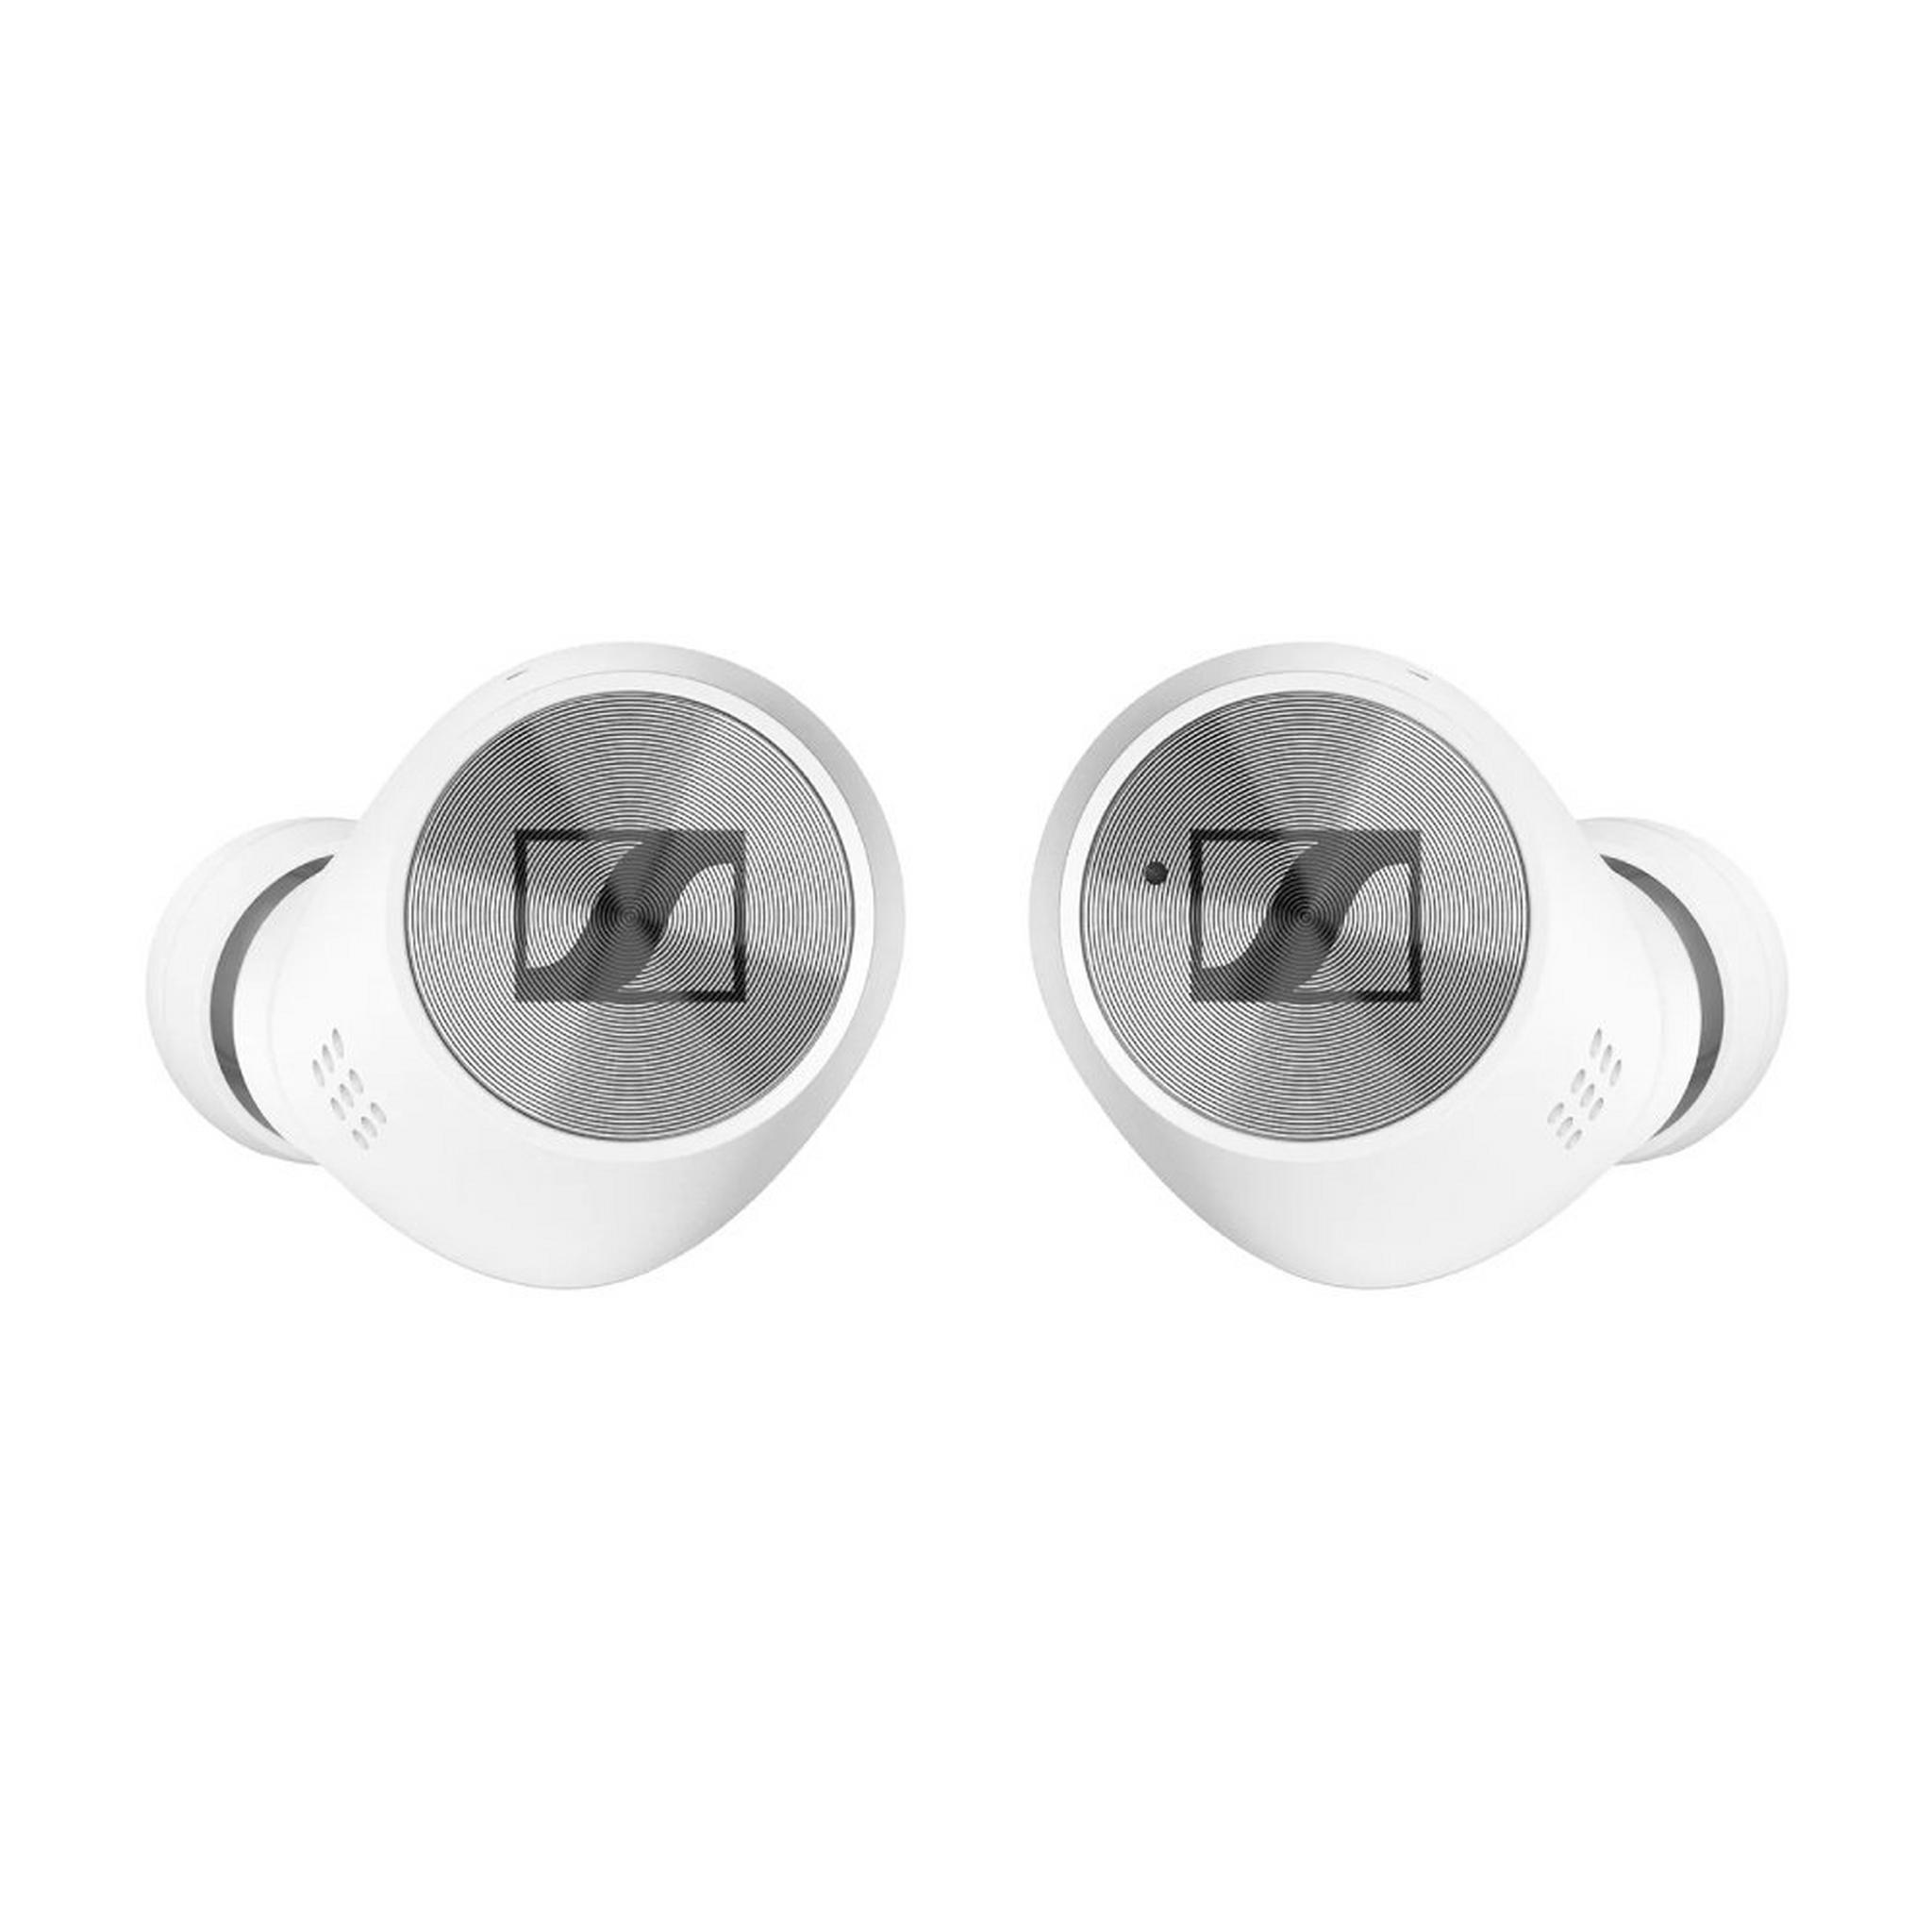 Sennheiser Momentum True Wireless 2 Earbuds- White